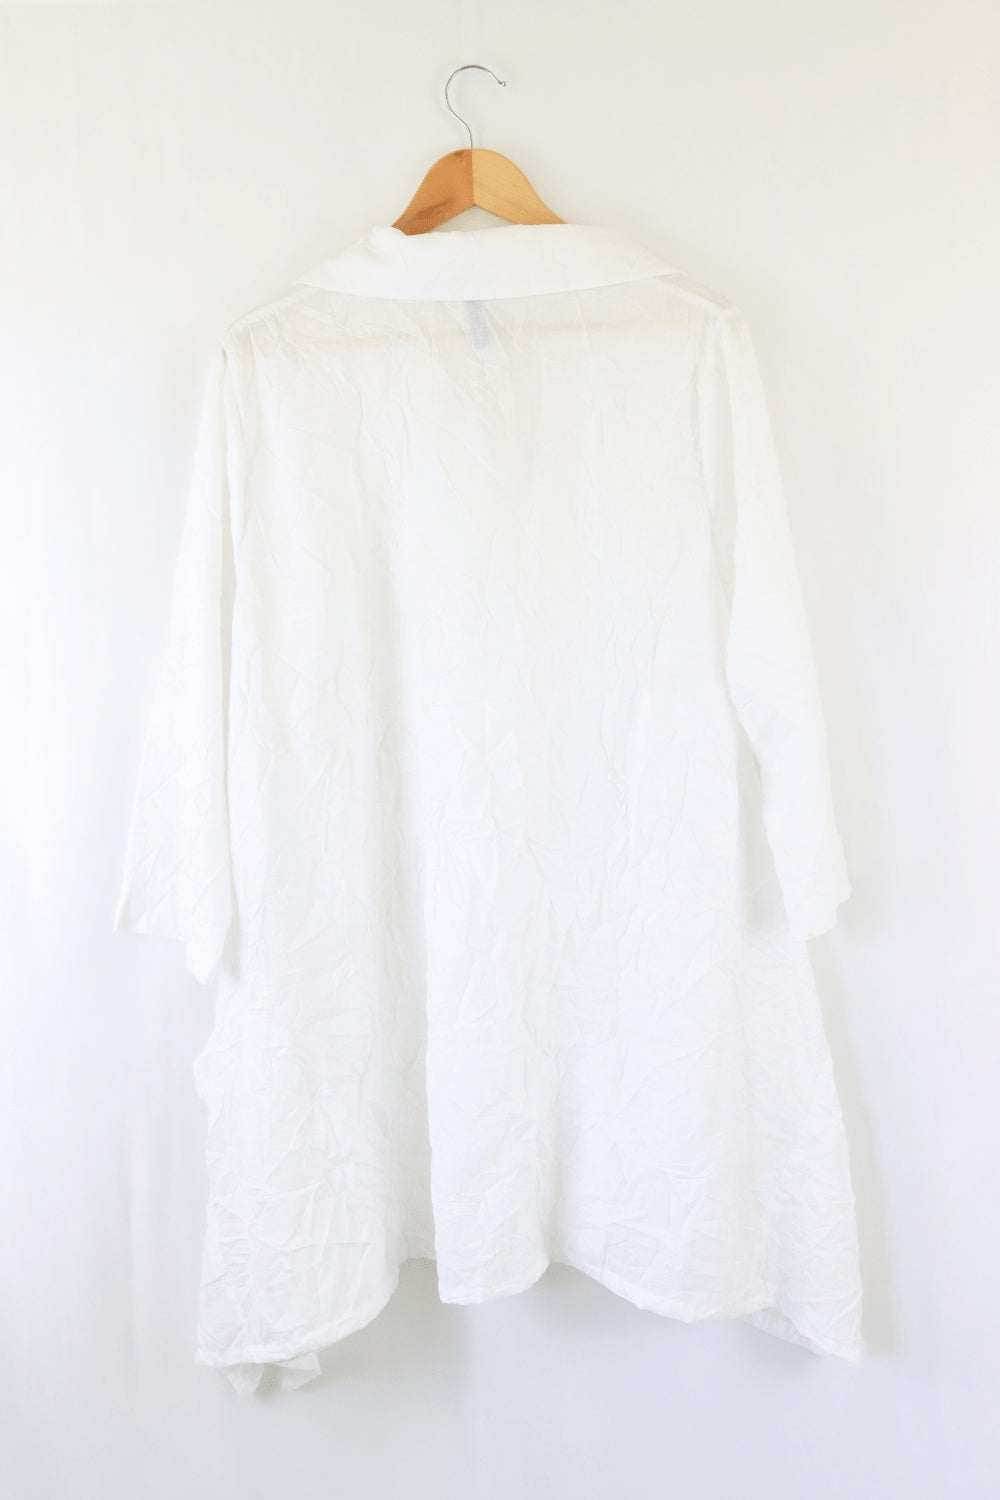 Taking Shape TS White Long Sleeve Dress 18